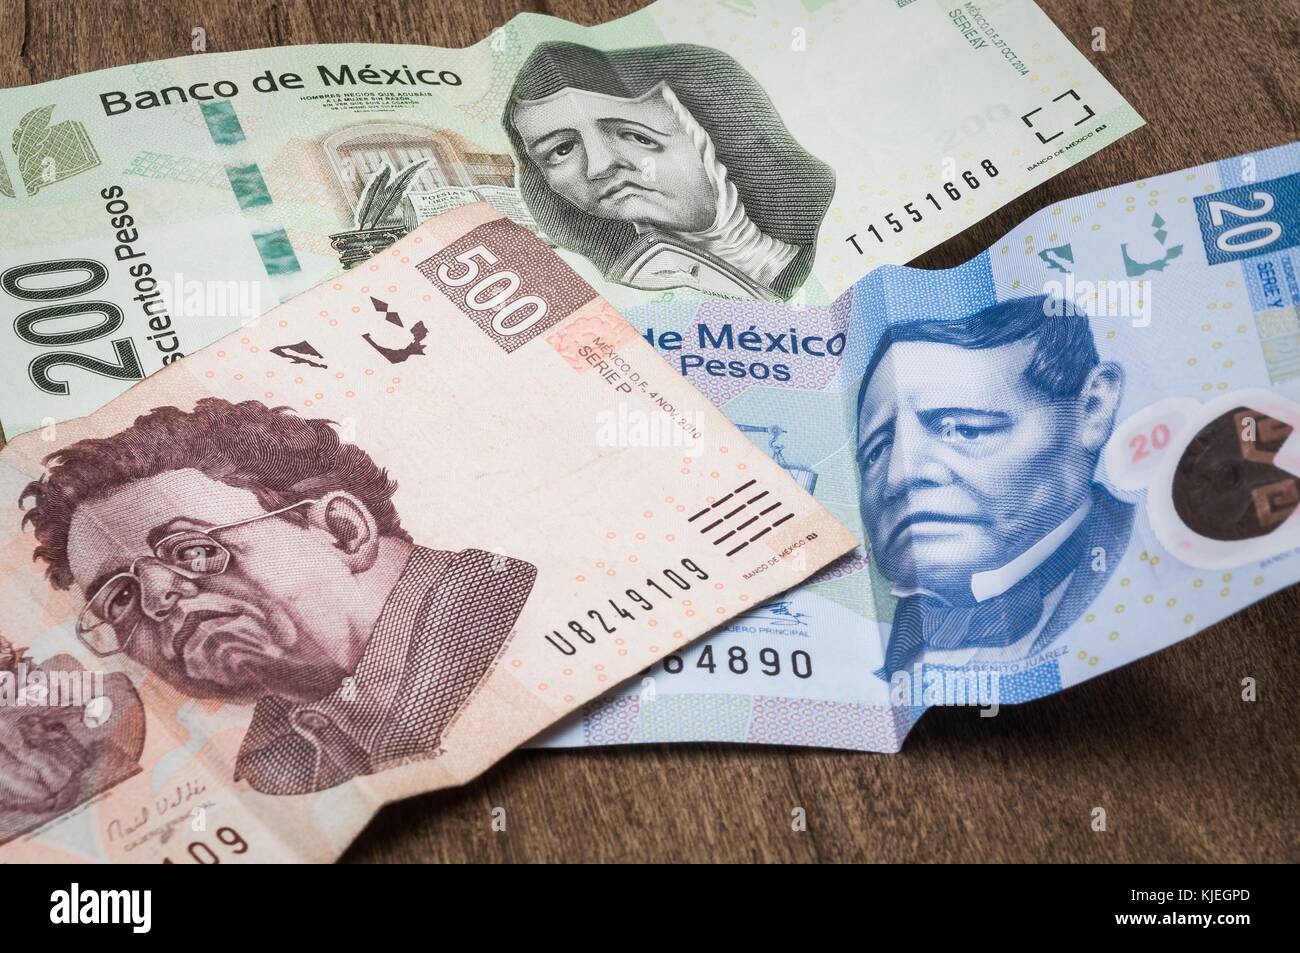 Bills of 20, 200 and 500 Mexican pesos seem sad. Stock Photo